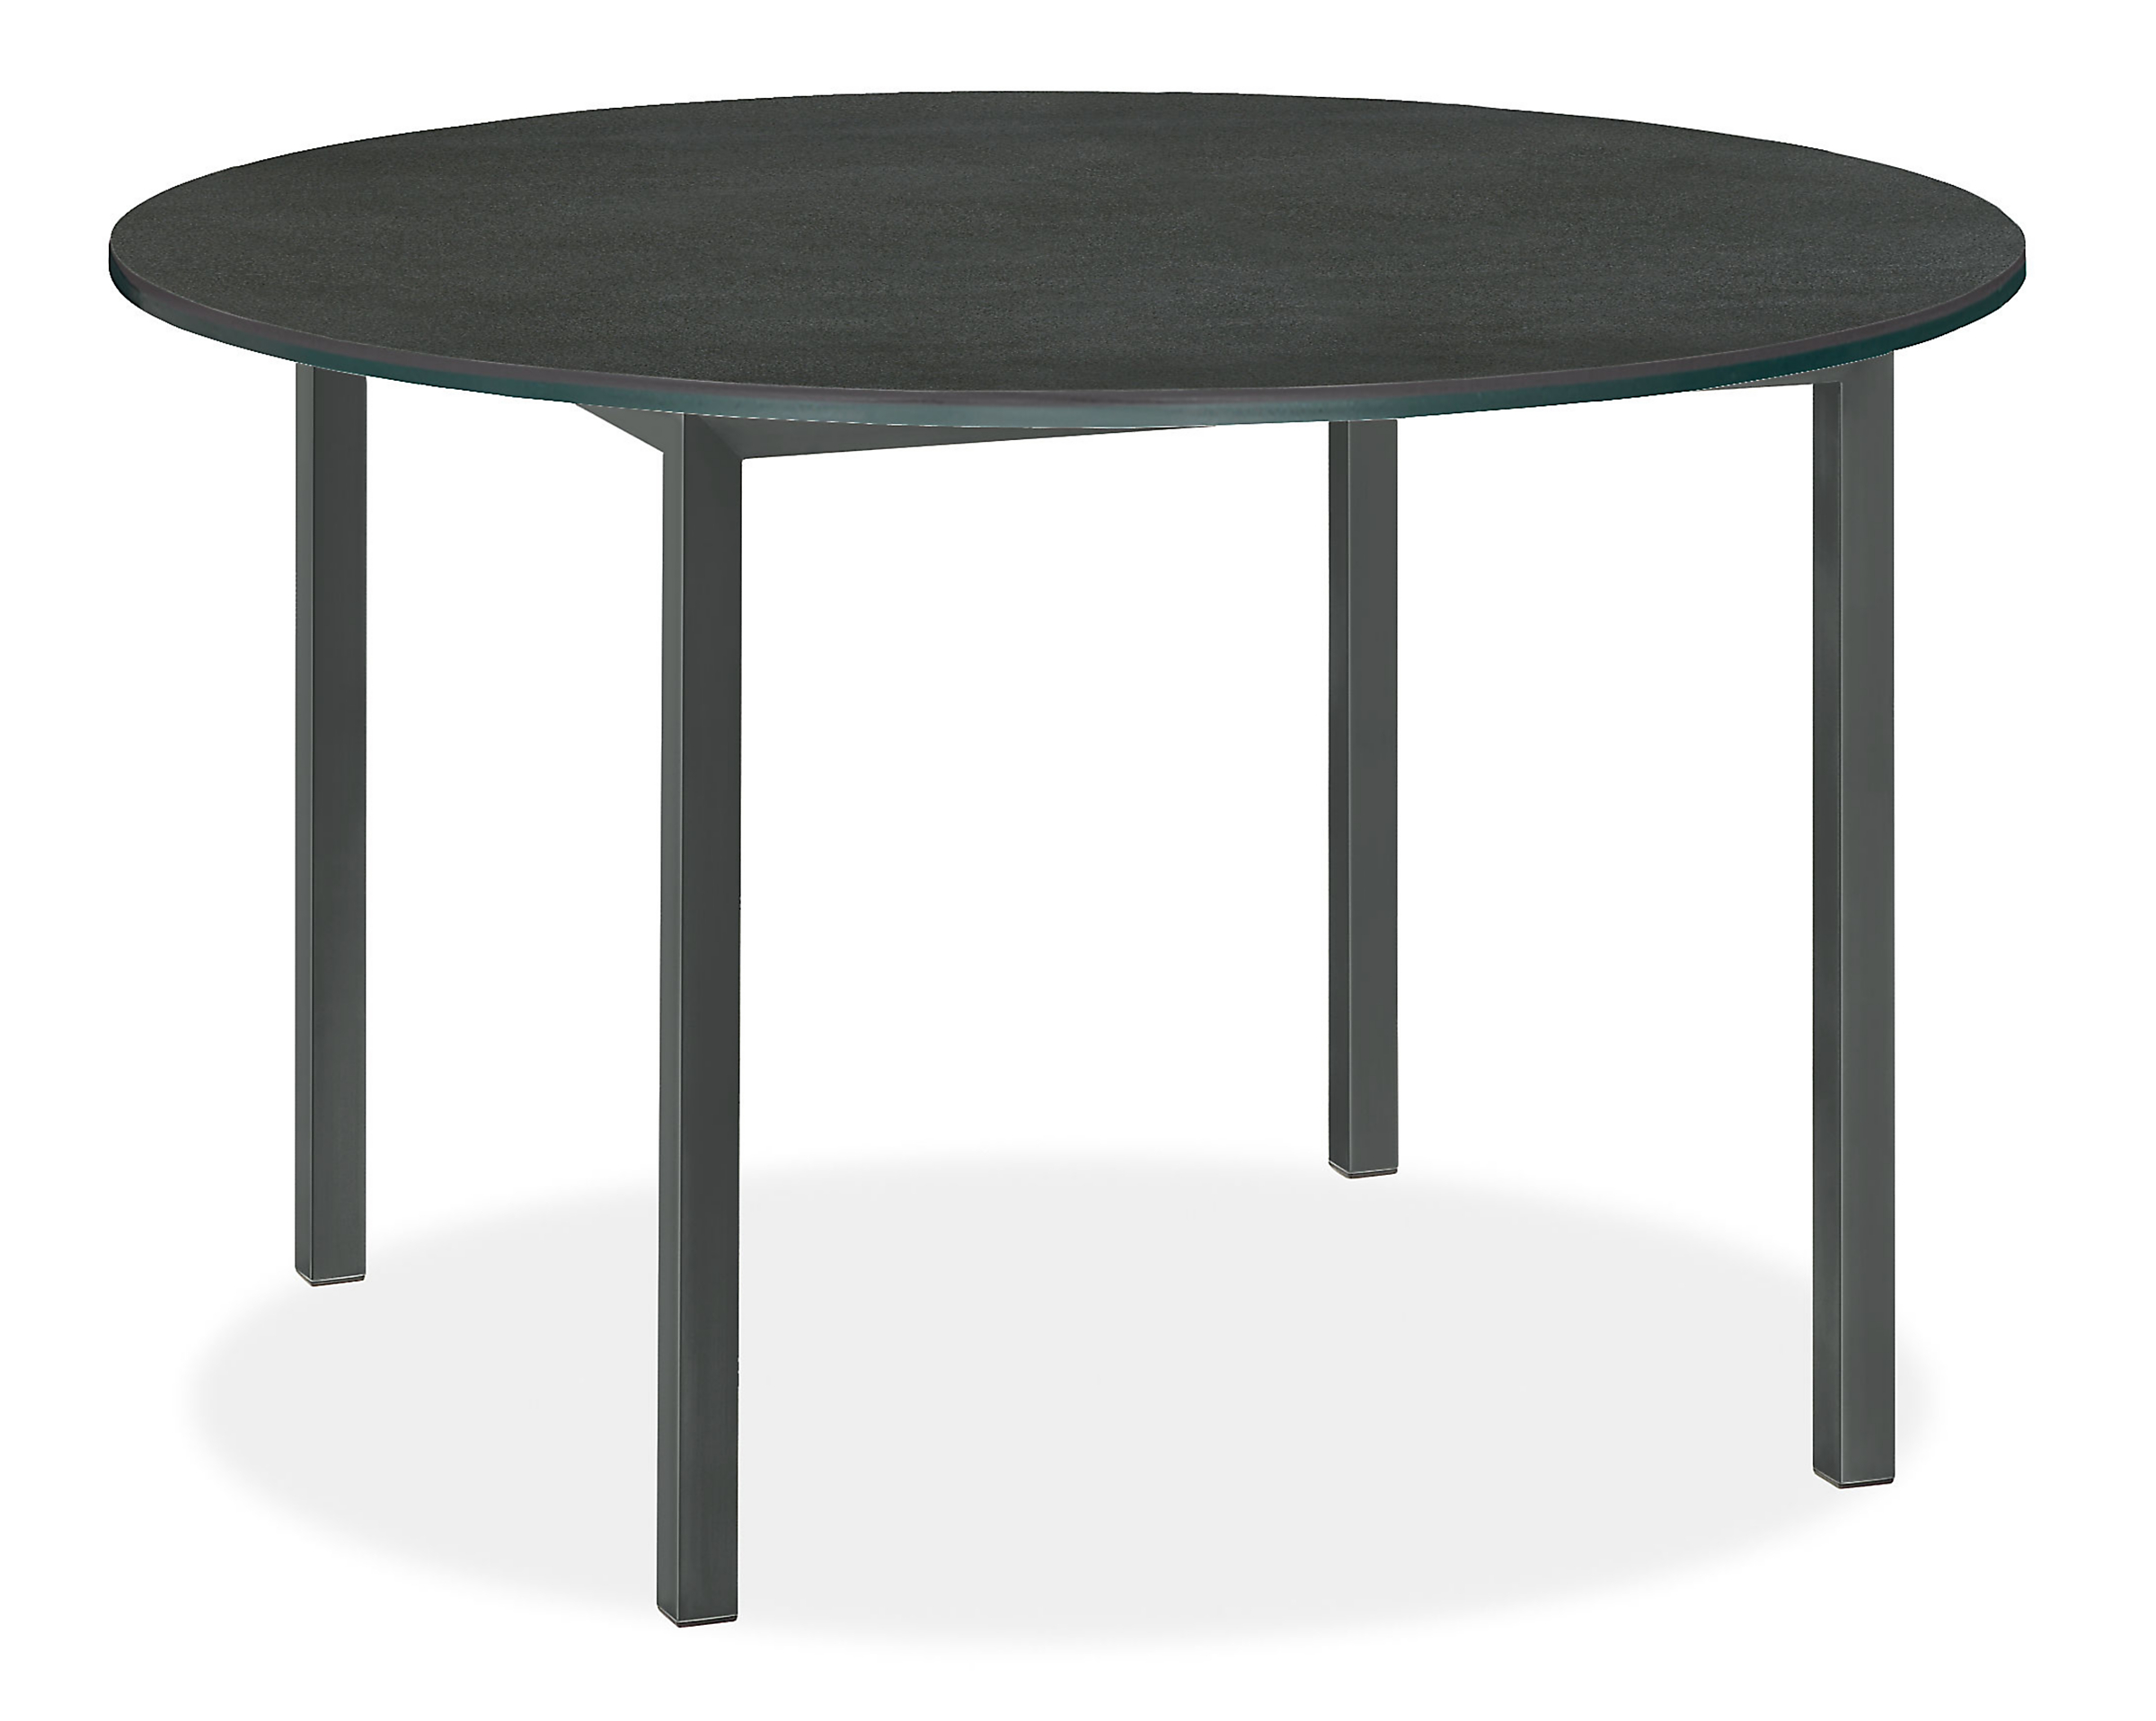 Parsons 48 diam Outdoor Table in Graphite with Dark Grey Ceramic Top